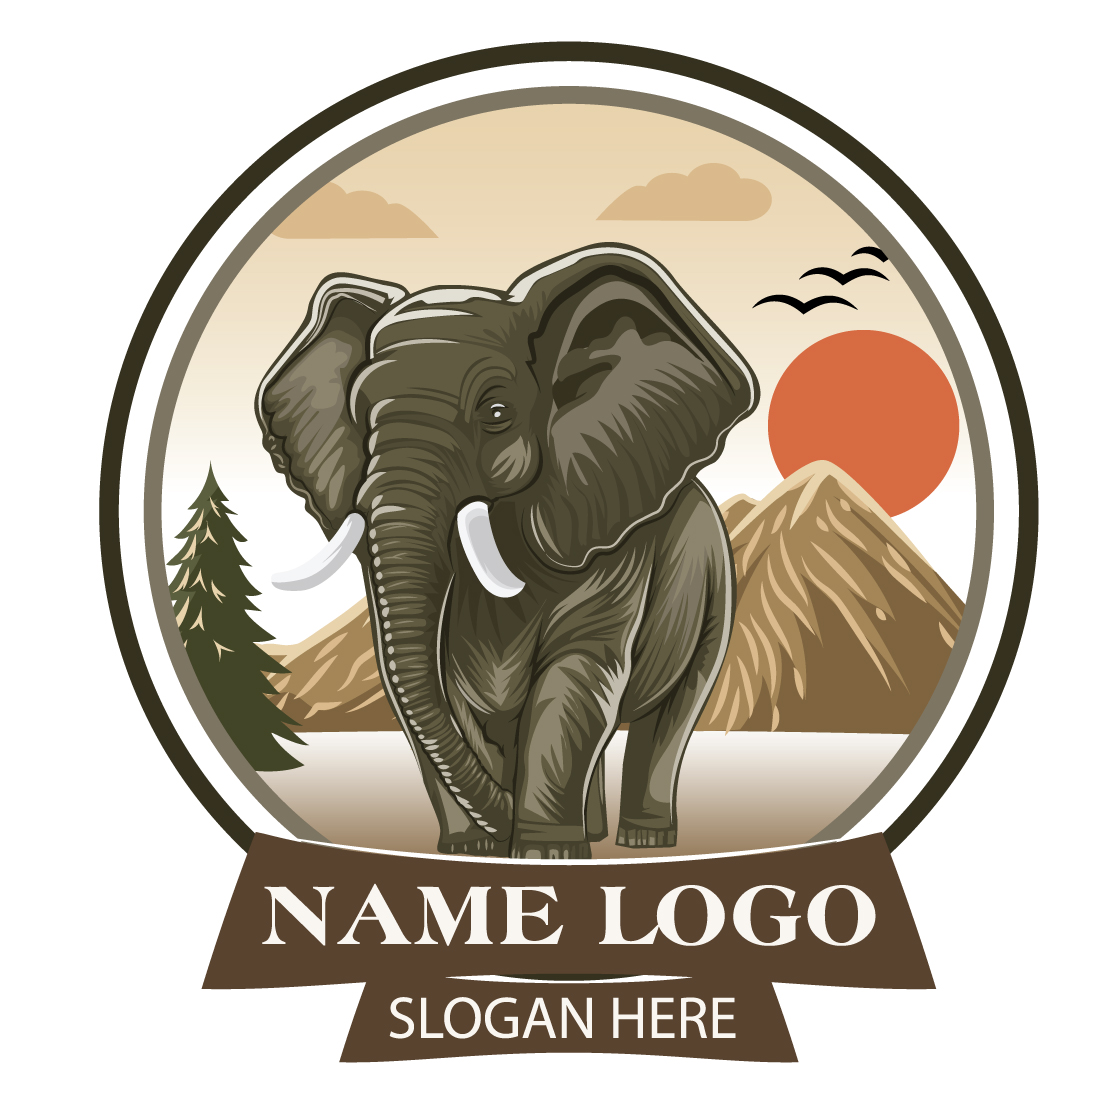 geometric logo art portrait illustration, a colorful art piece, illustration with vertebrate elephant cover image.